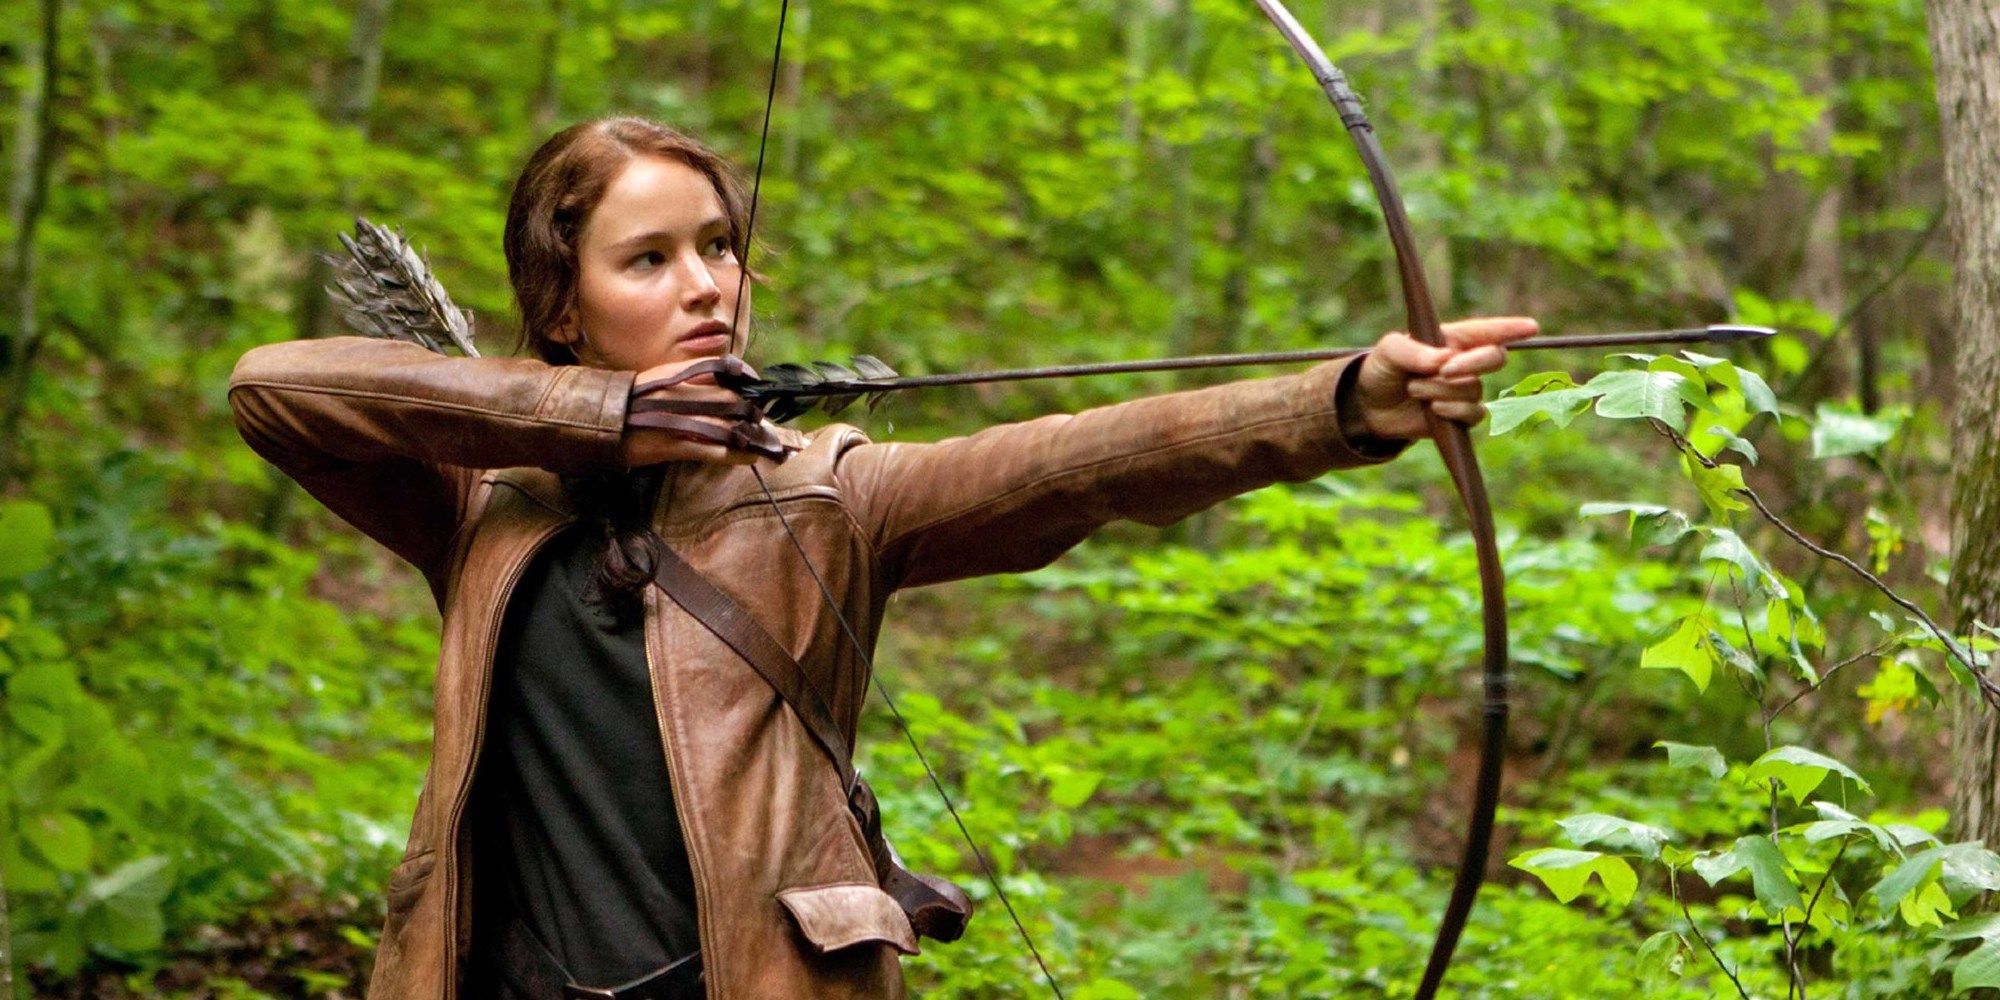 Jennifer Lawrence as Katniss Everdeen shooting an arrow in The Hunger Games